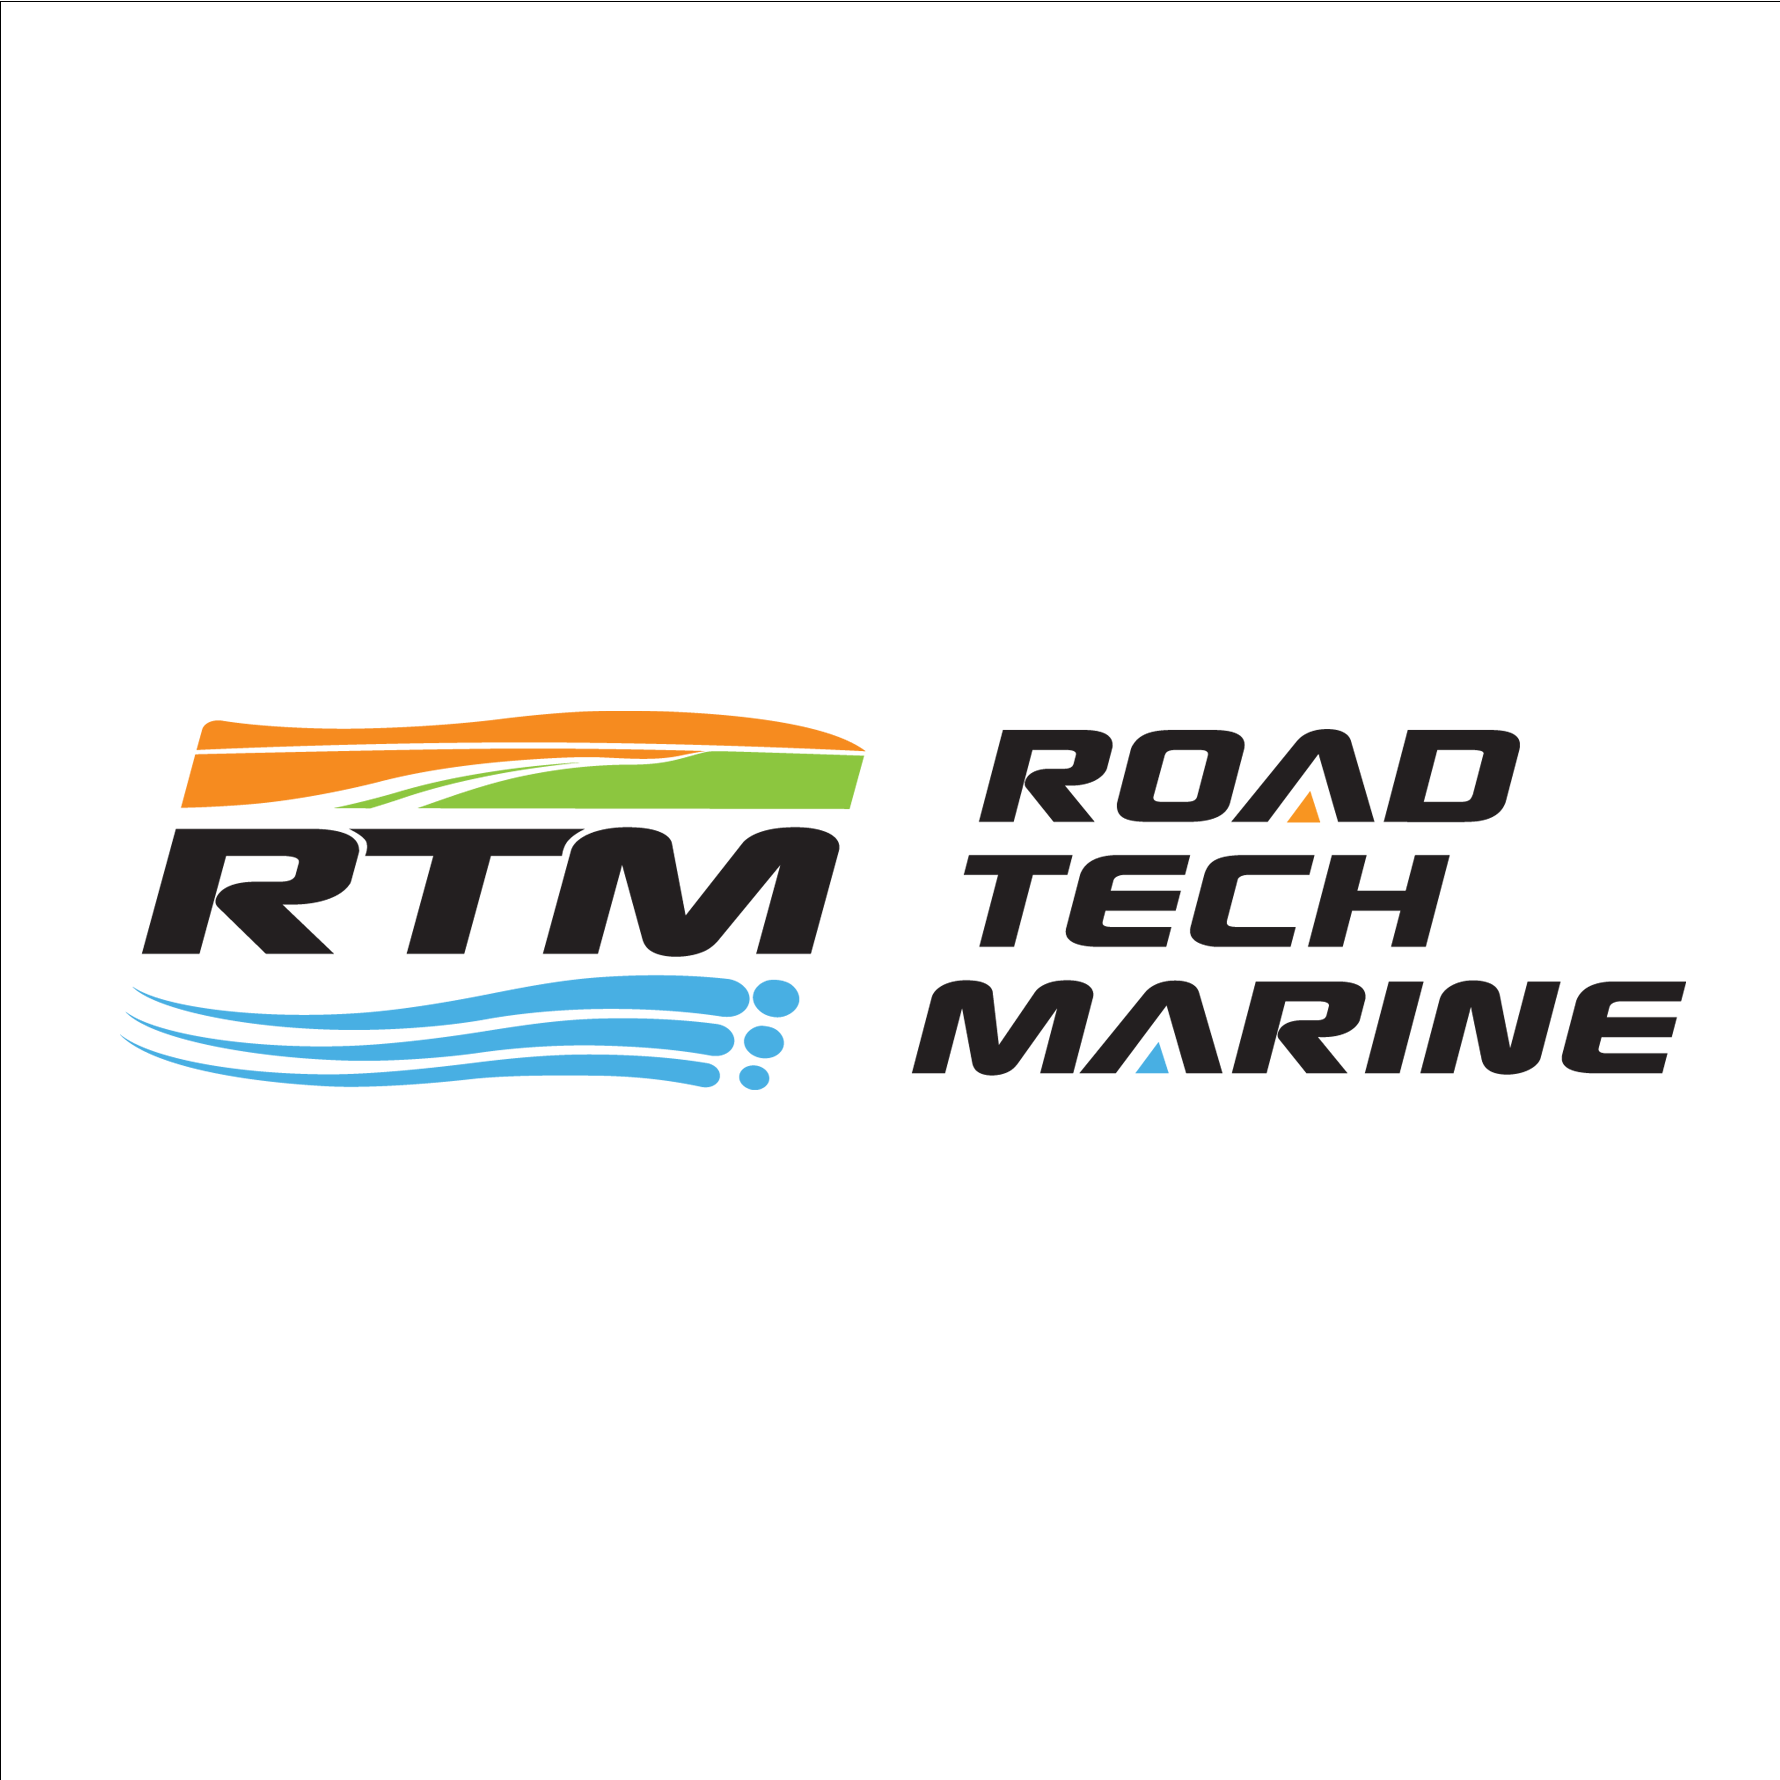 RTM - Road Tech Marine Darwin Millner (08) 8947 1504